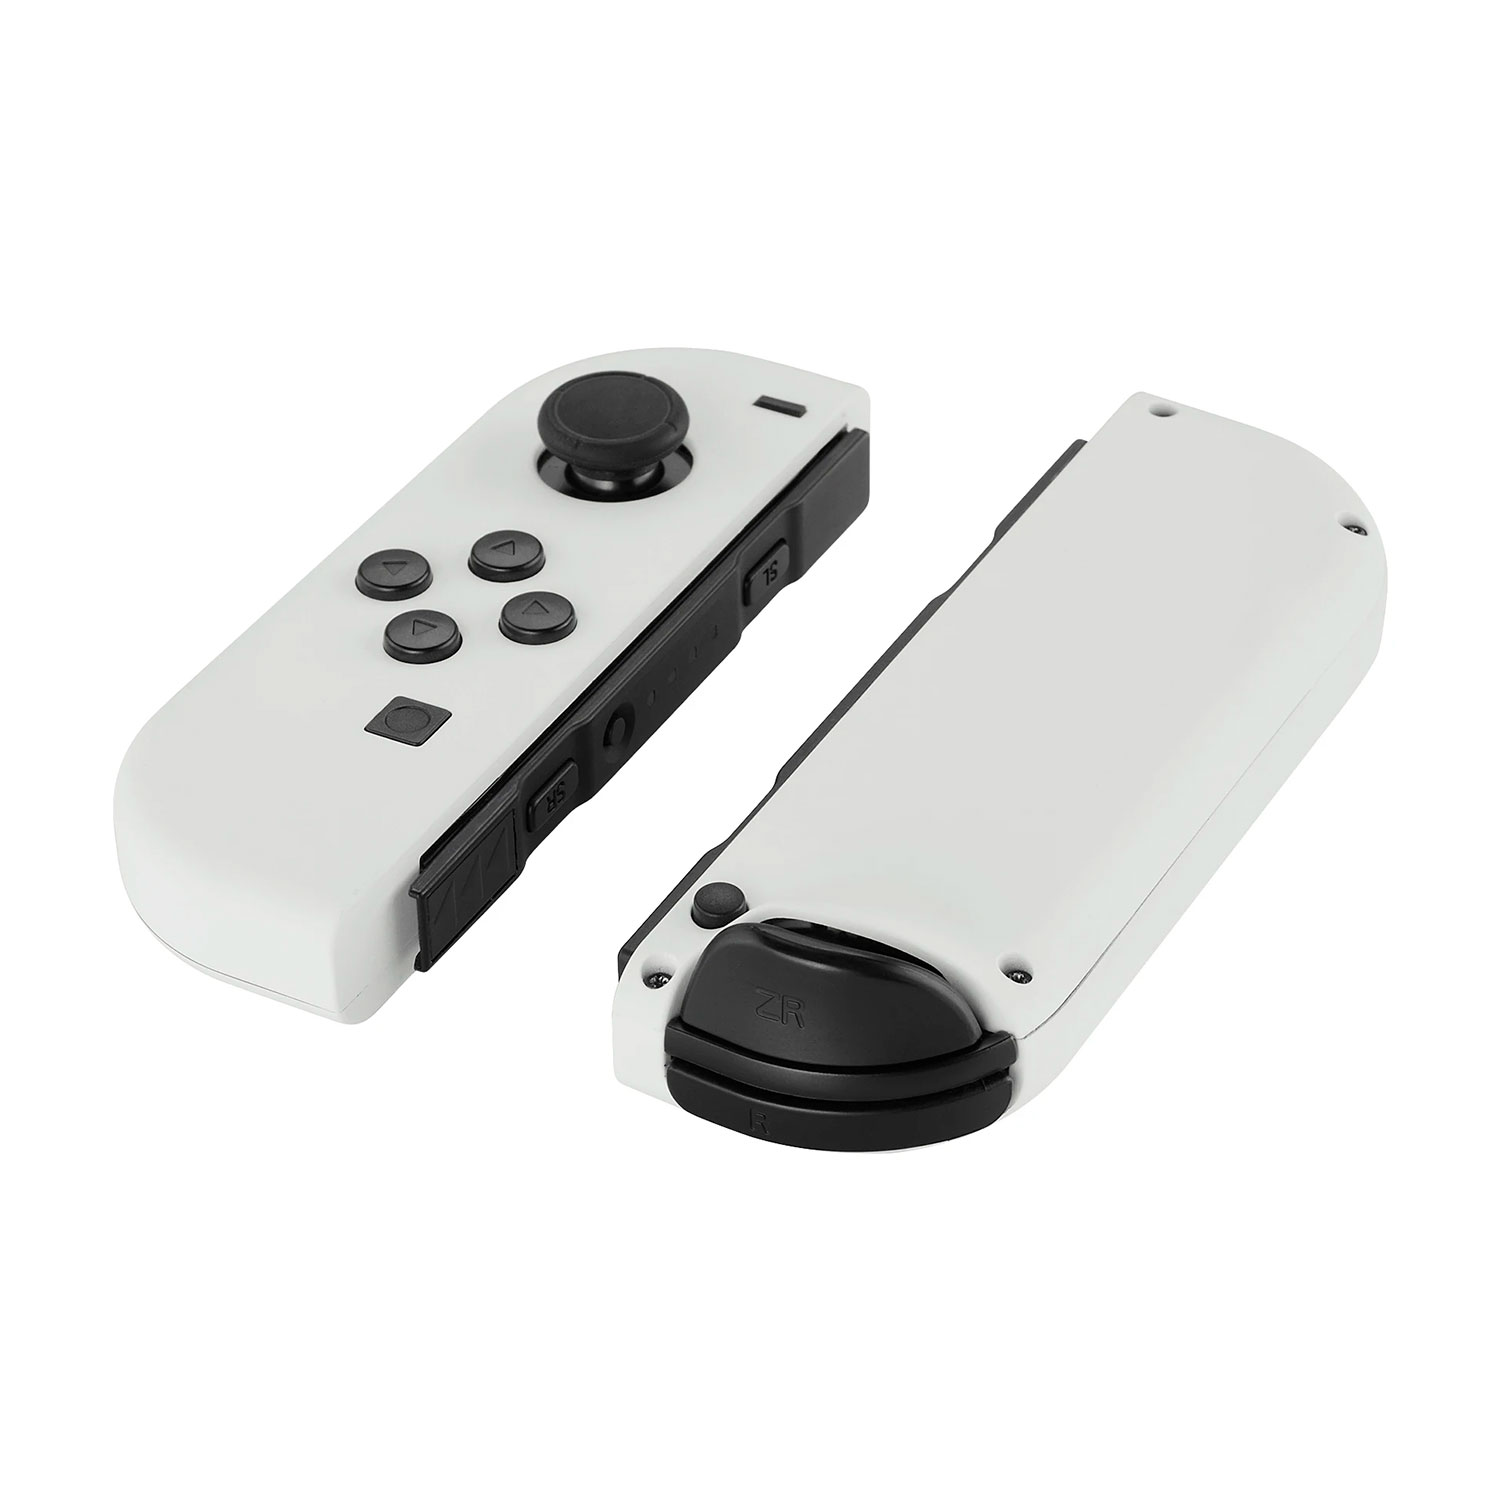 Controle Joy-Con para Nintendo Switch L e R - Branco (Sem Caixa)
